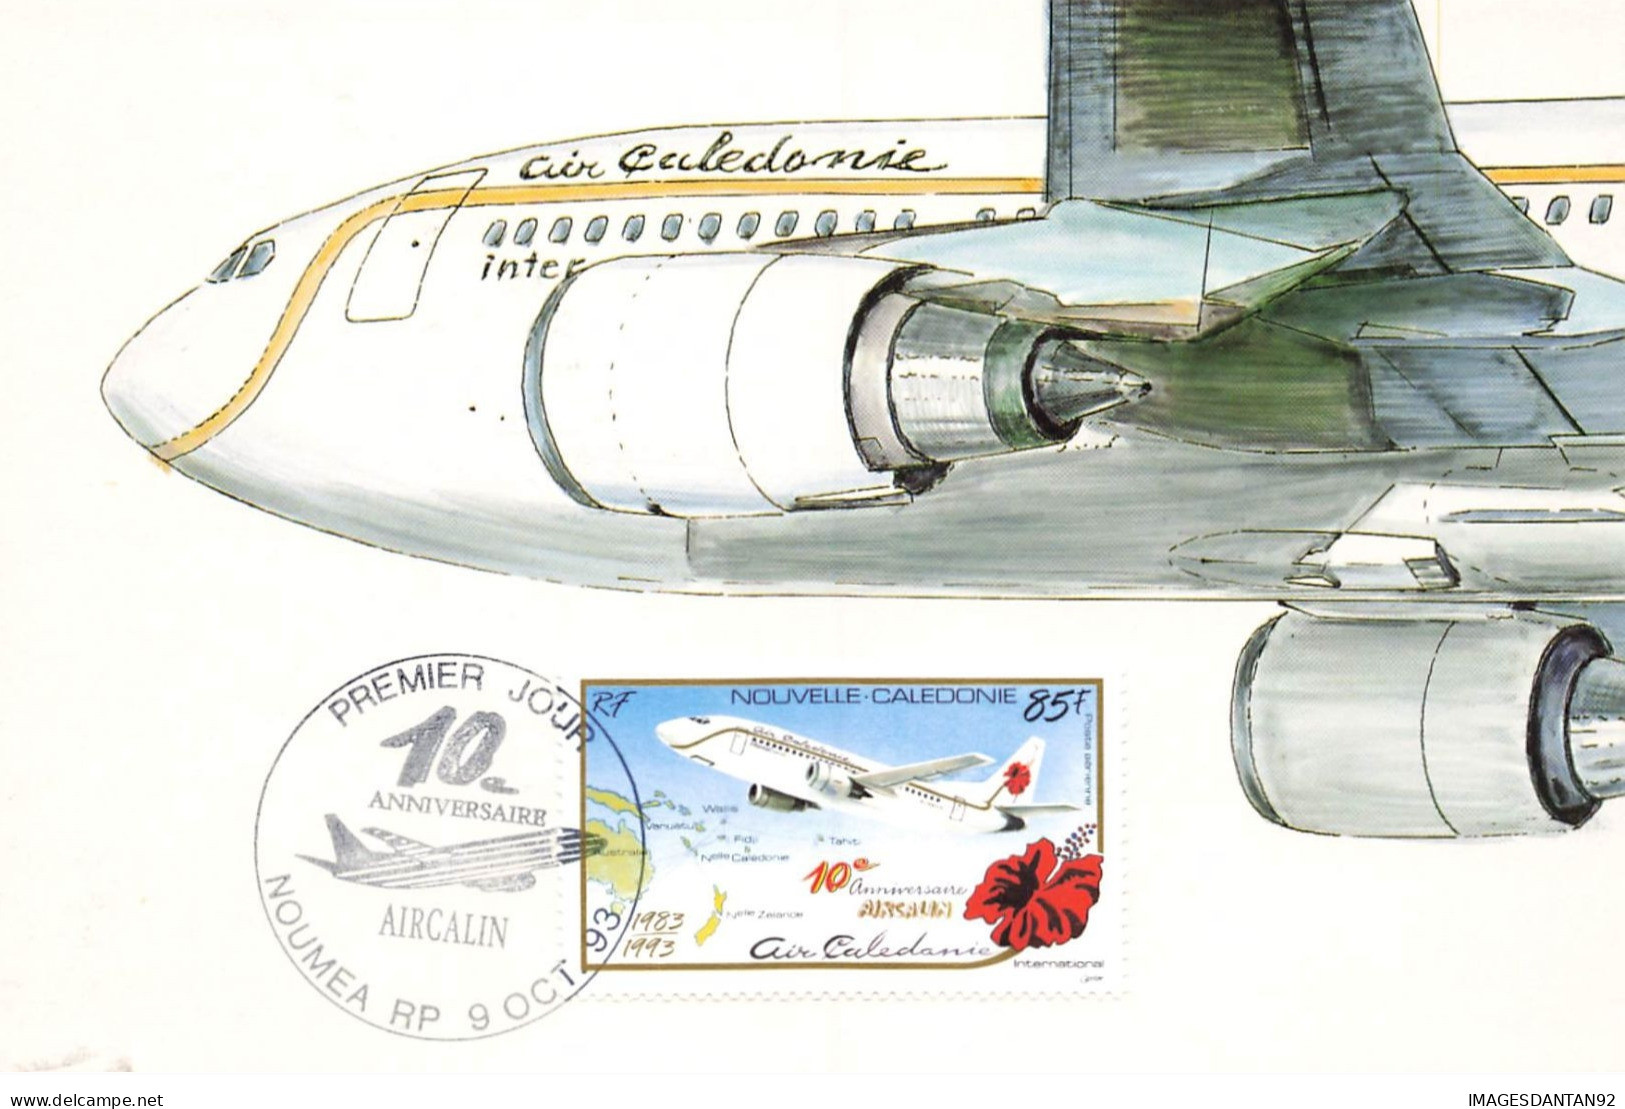 CARTE MAXIMUM #23417 NOUVELLE CALEDONIE NOUMEA AIRCALIN 1993 AVION AVIATION AIR CALEDONIE INTER - Cartes-maximum